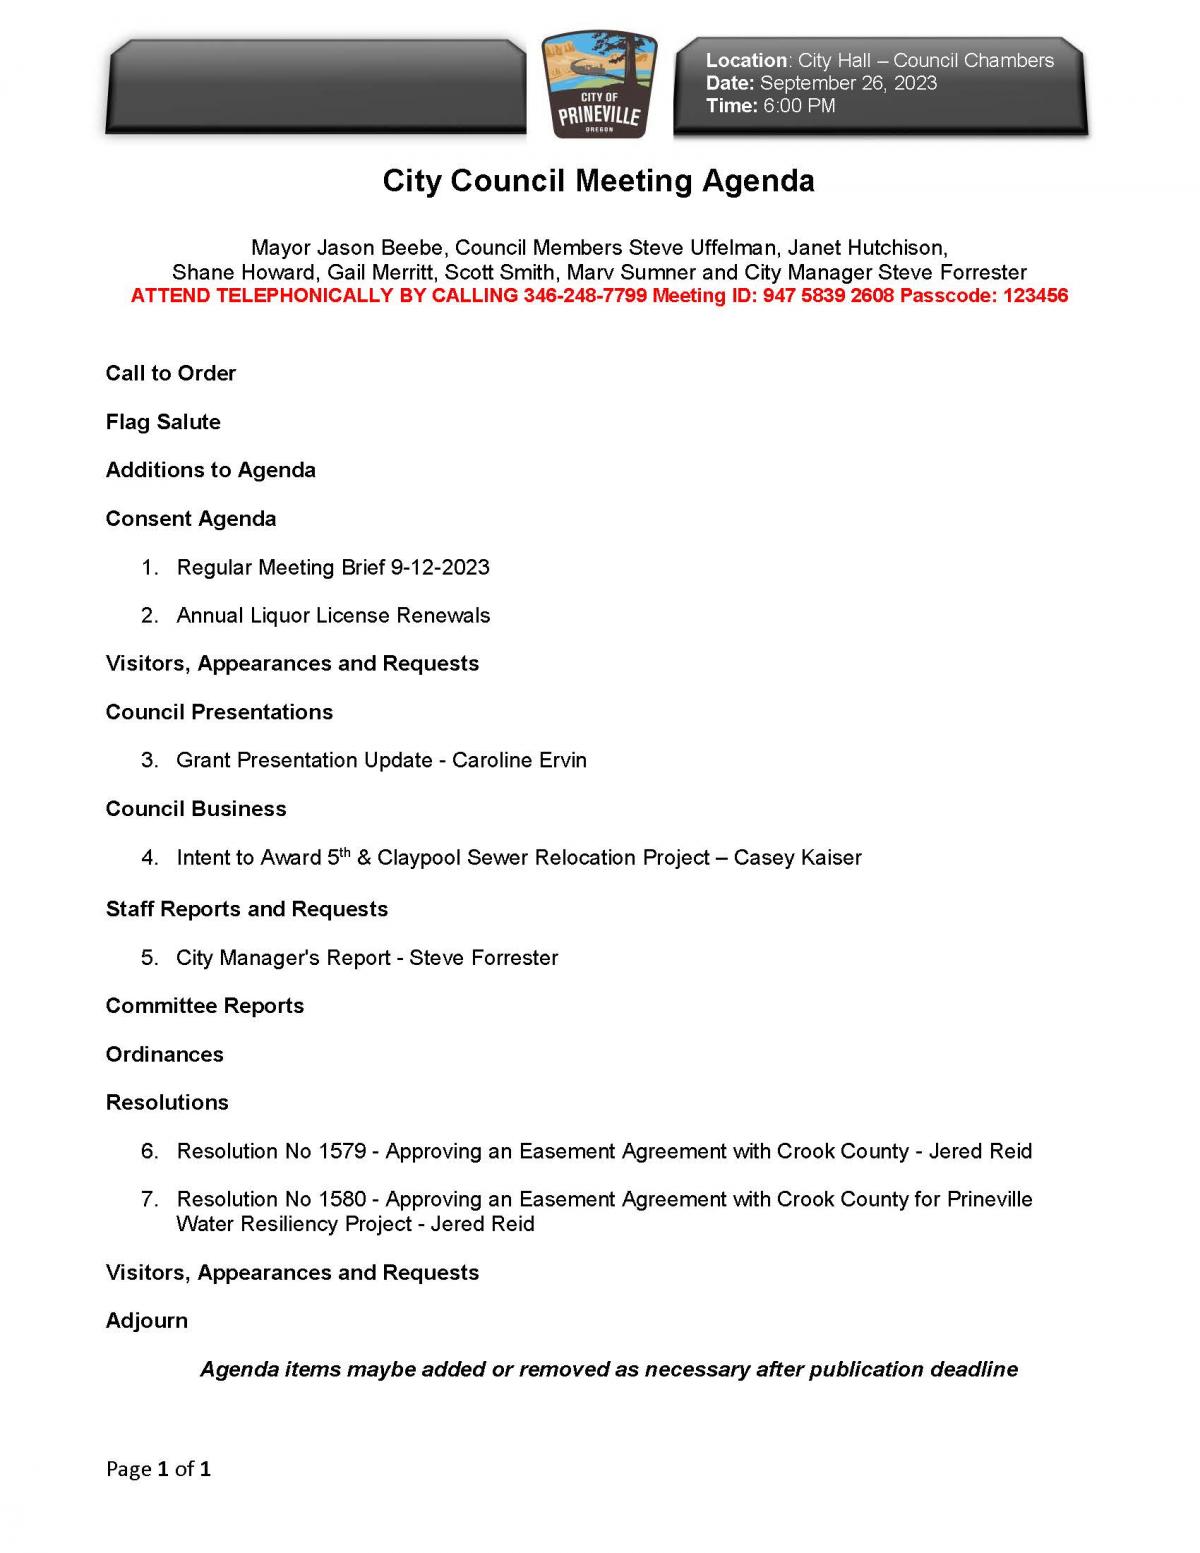 Council Agenda 9-26-2023